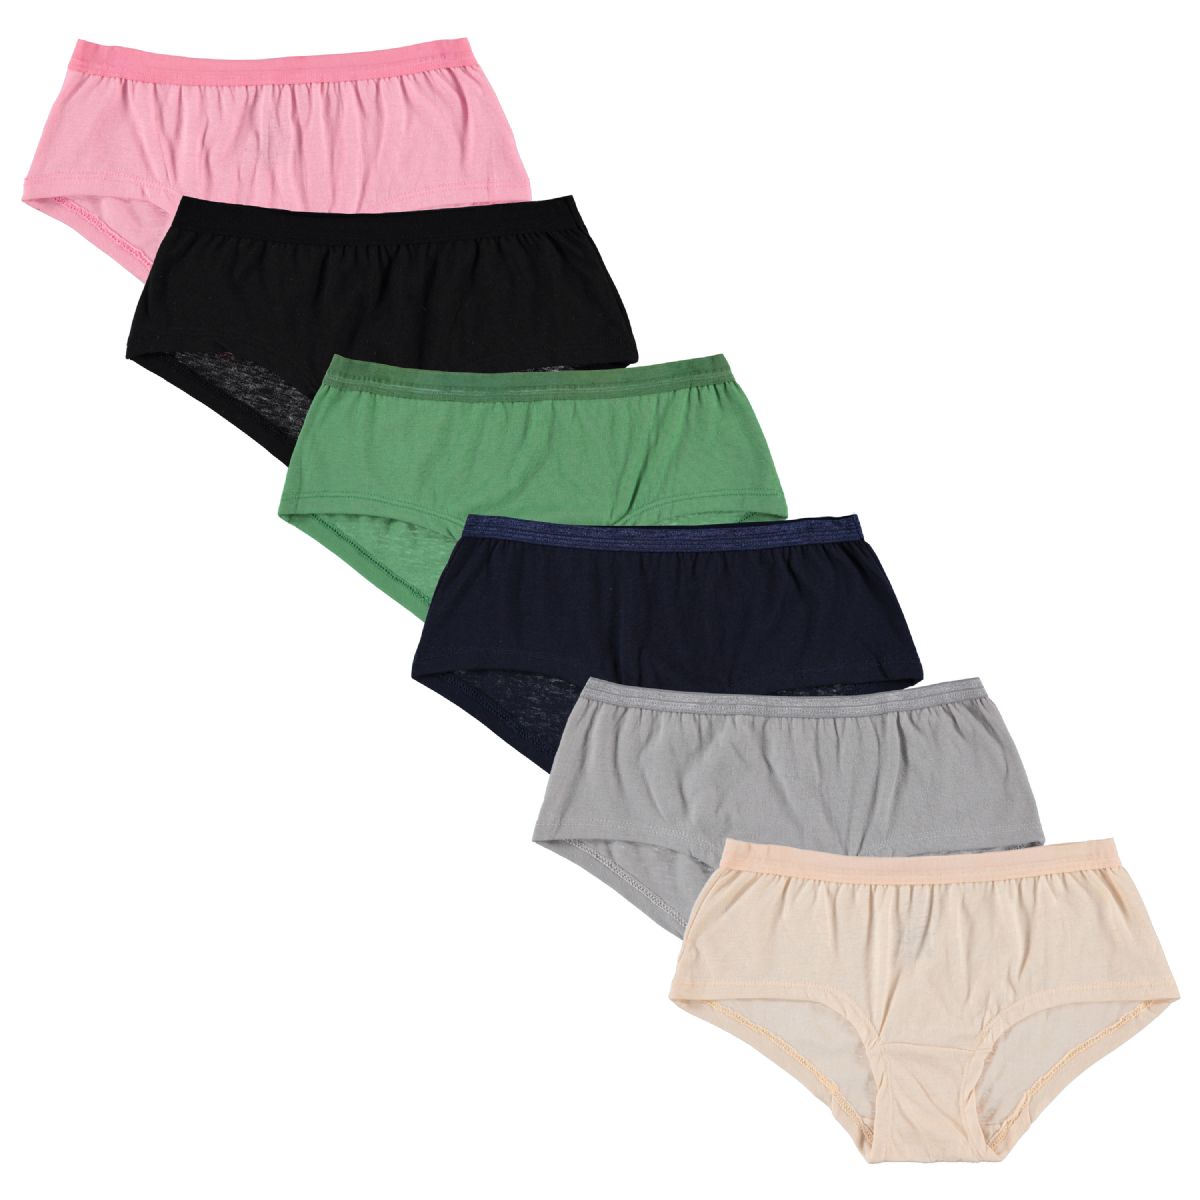 12 Bulk Yacht & Smith Womens Cotton Blend Underwear In Assorted Colors, Size Medium